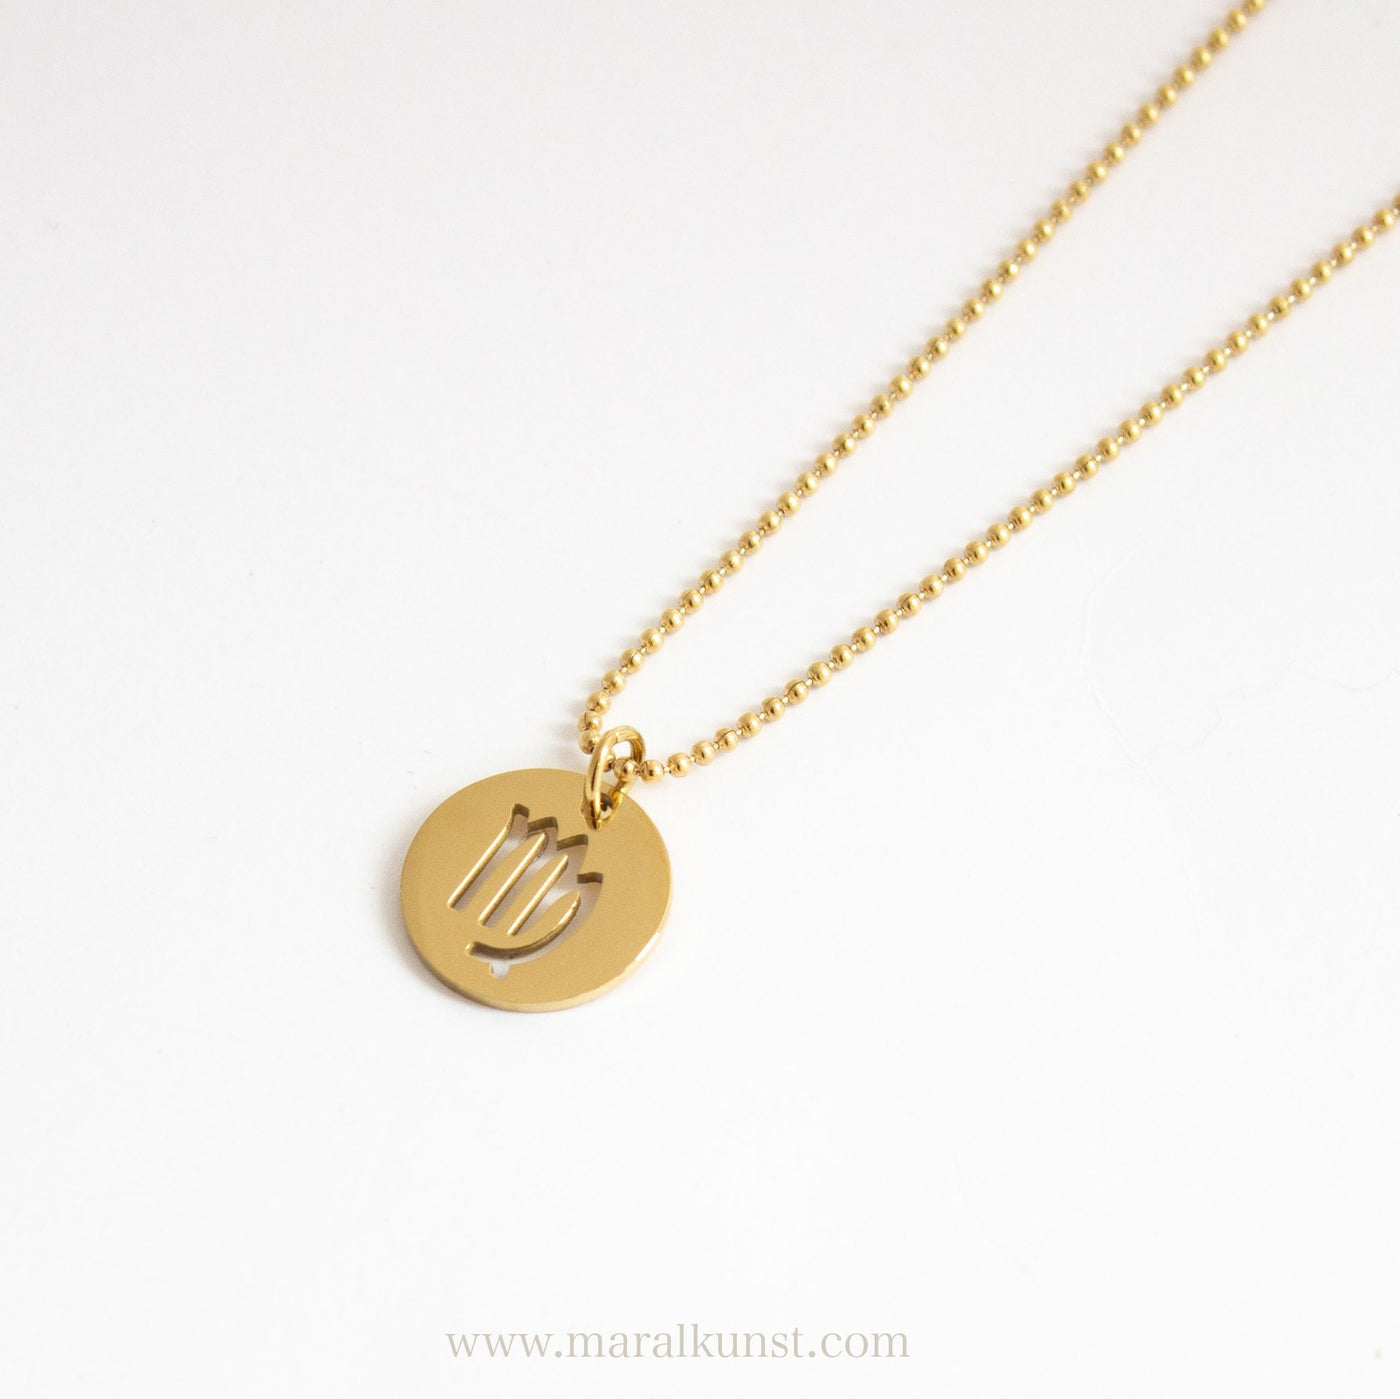 Virgo Zodiac Sign Necklace - Maral Kunst Jewelry